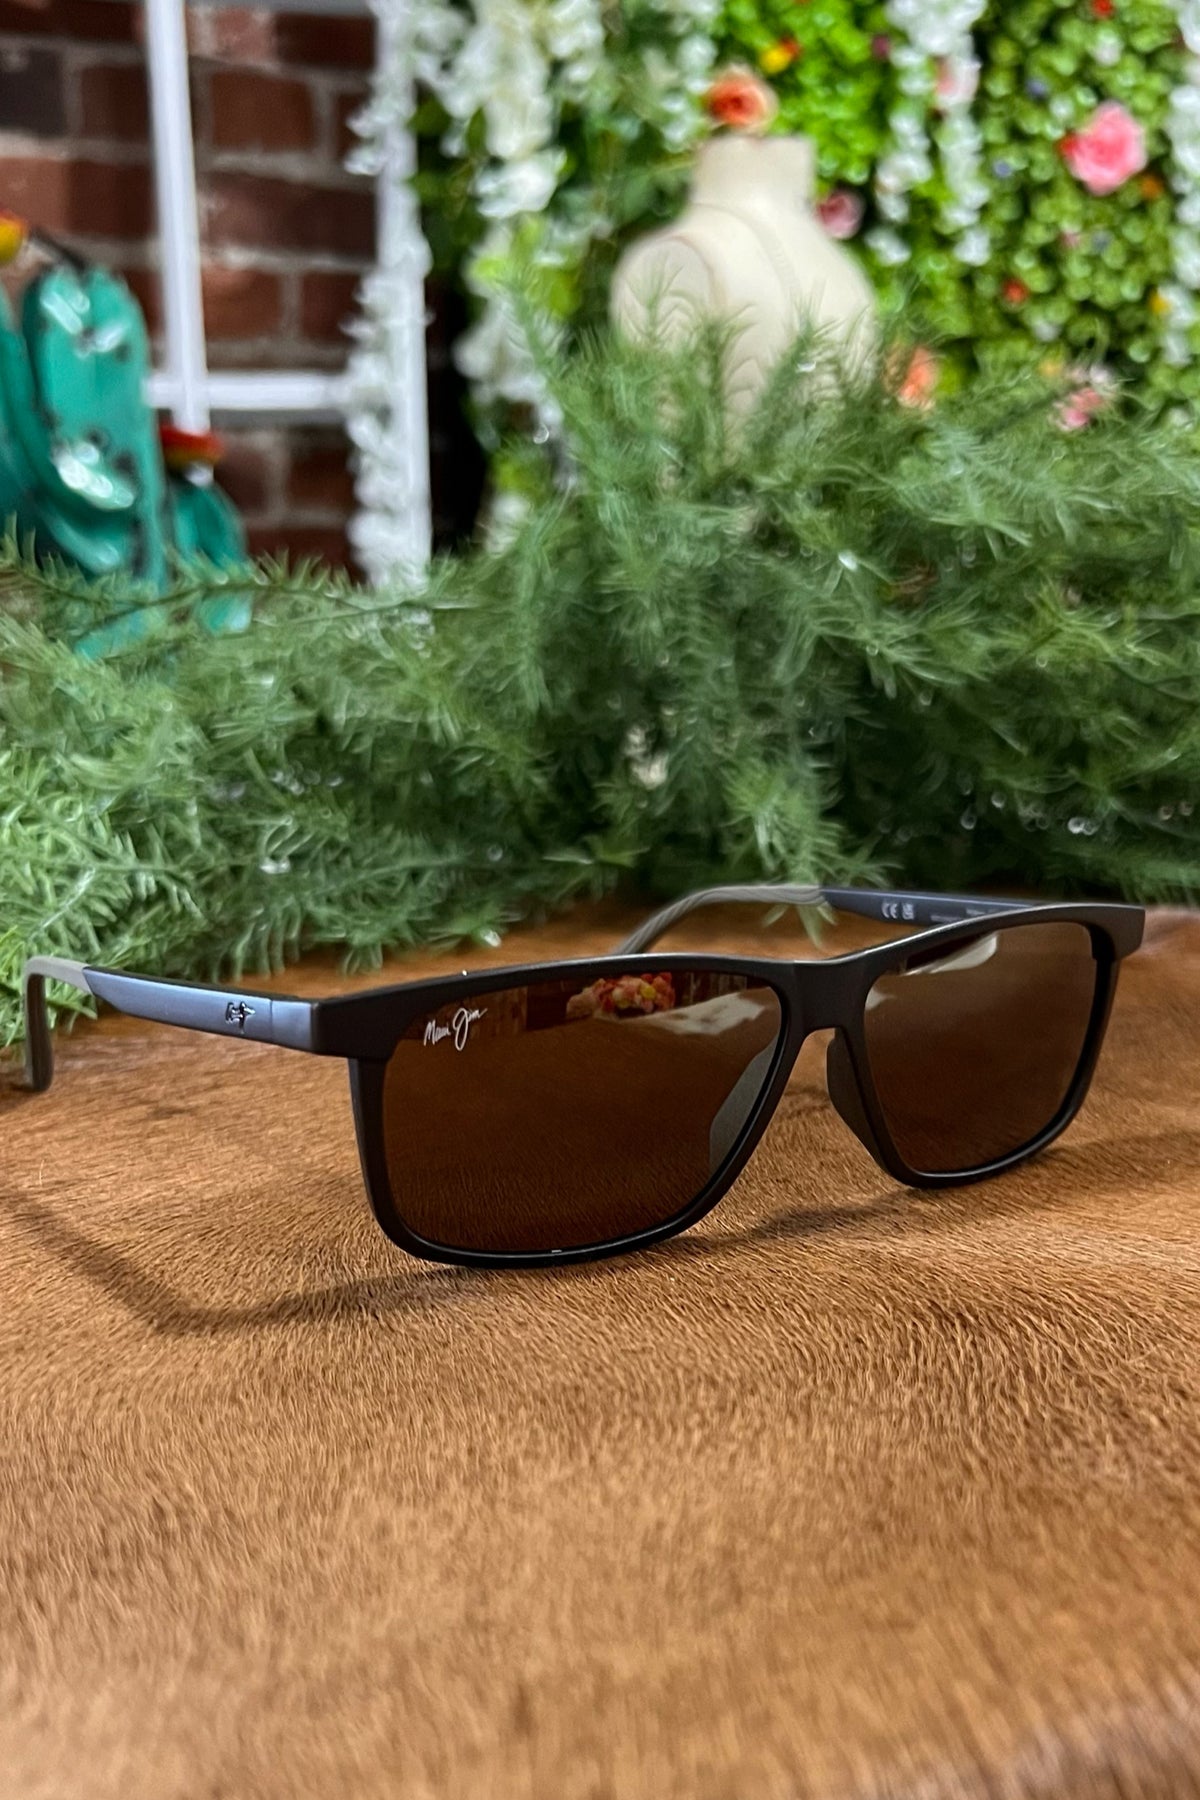 Maui Jim PULAMA Polarized Sunglasses-Sunglasses-Maui Jim-Gallop 'n Glitz- Women's Western Wear Boutique, Located in Grants Pass, Oregon